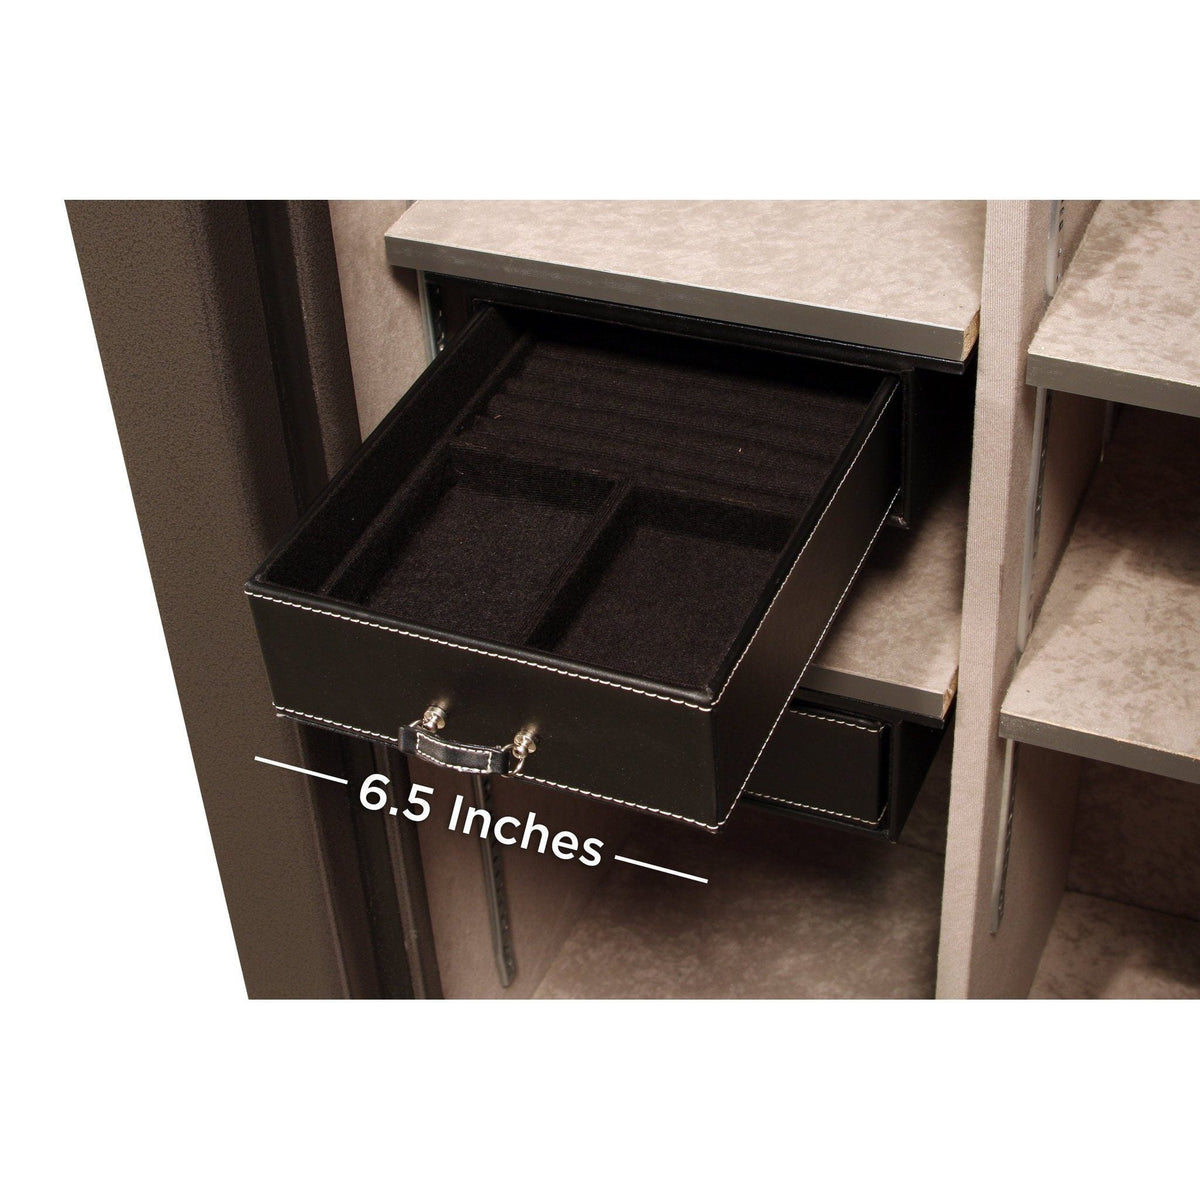 Accessory - Storage - Jewelry Drawer - 6.5 inch - under shelf mount - 20 size safes